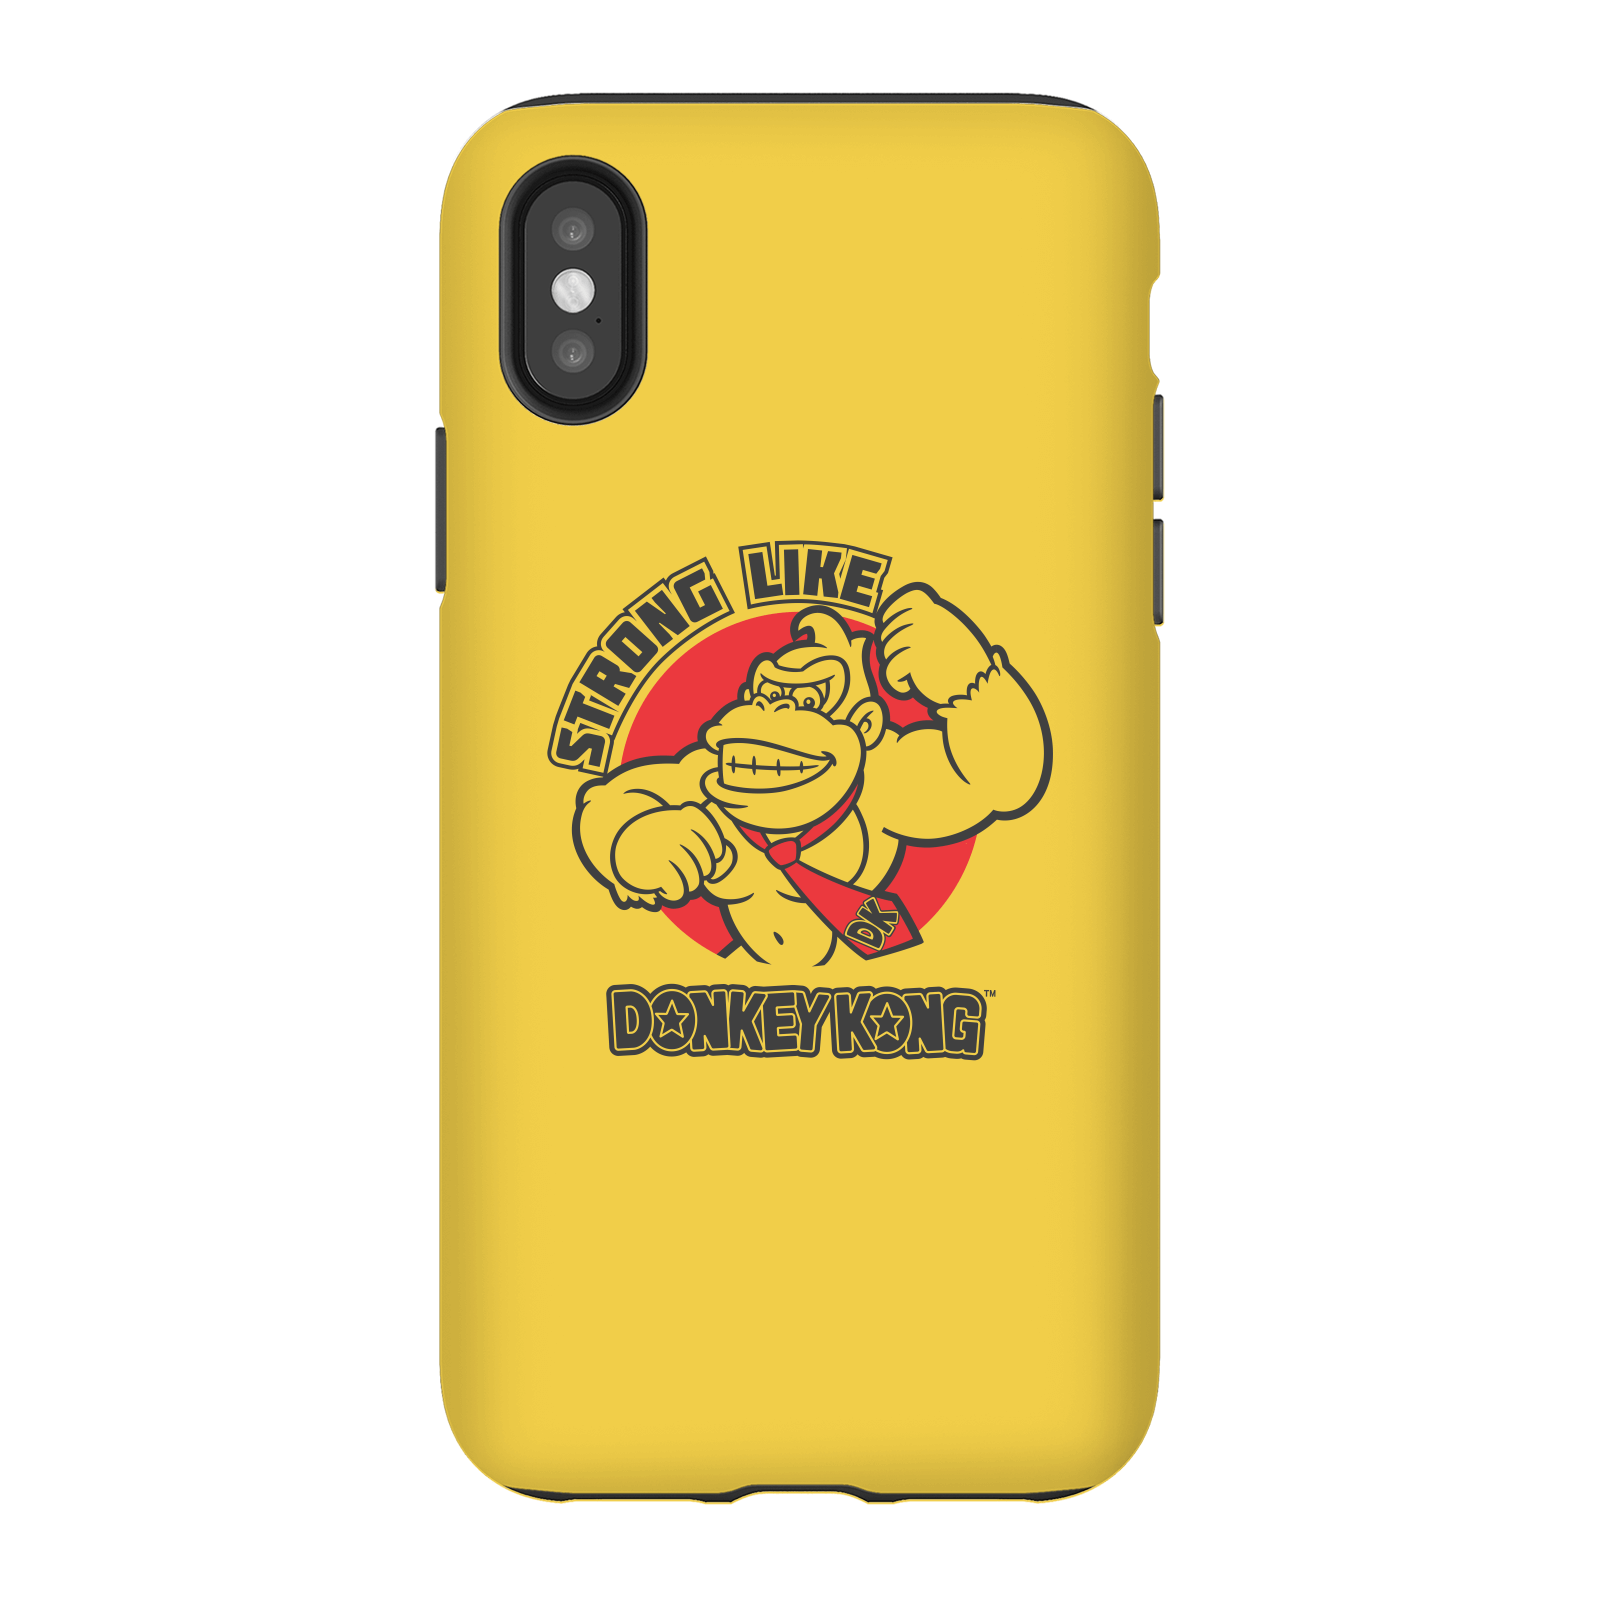 Nintendo Donkey Kong Strong Like Donkey Kong Phone Case - iPhone X - Tough Case - Matte